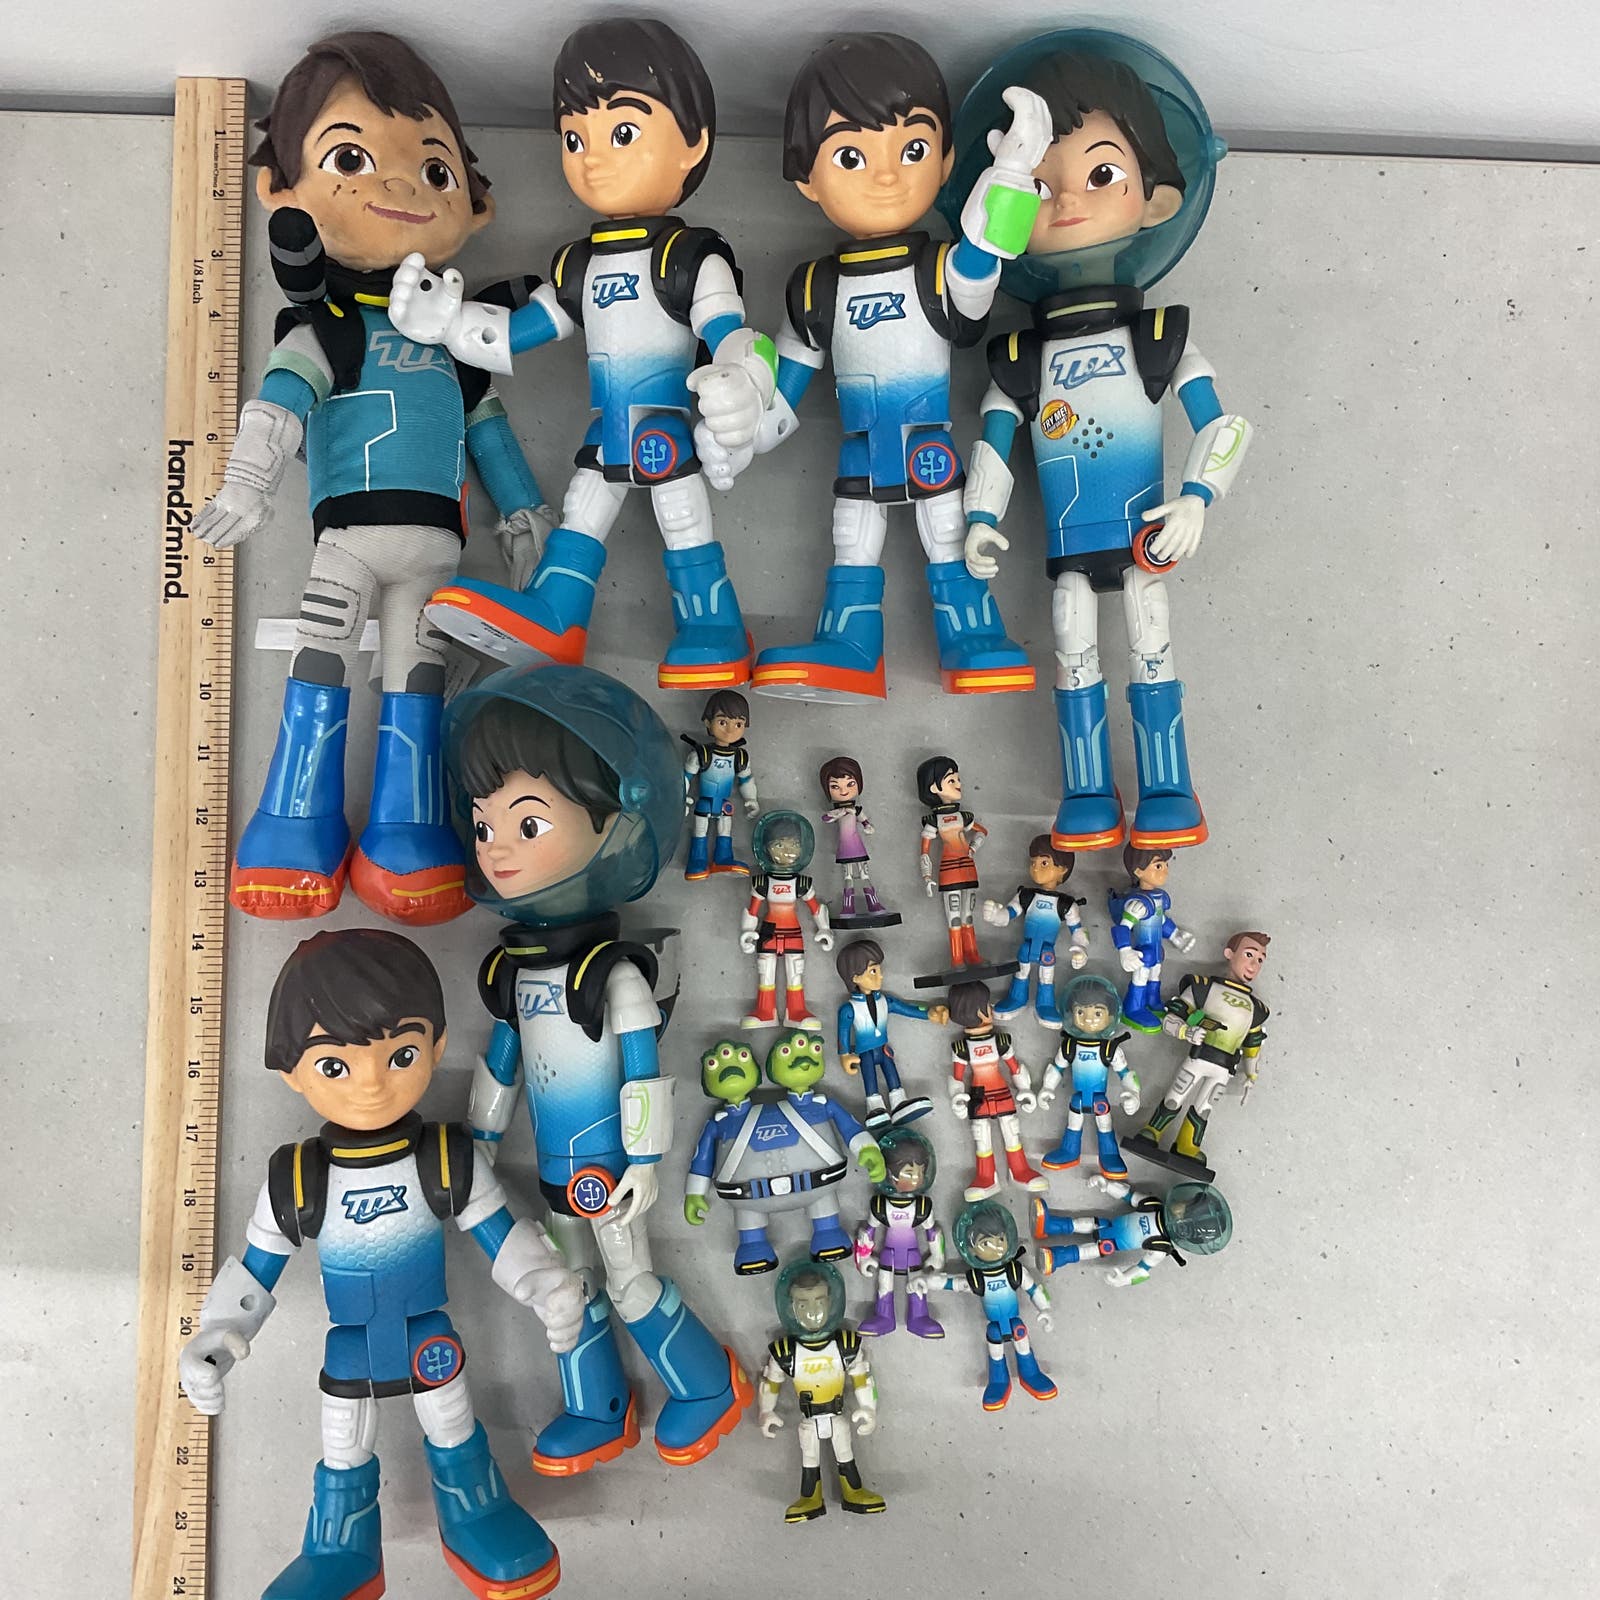 10 Pounds Disney Junior Mission Force One Wholesale Action Figure Toy Lot - Warehouse Toys